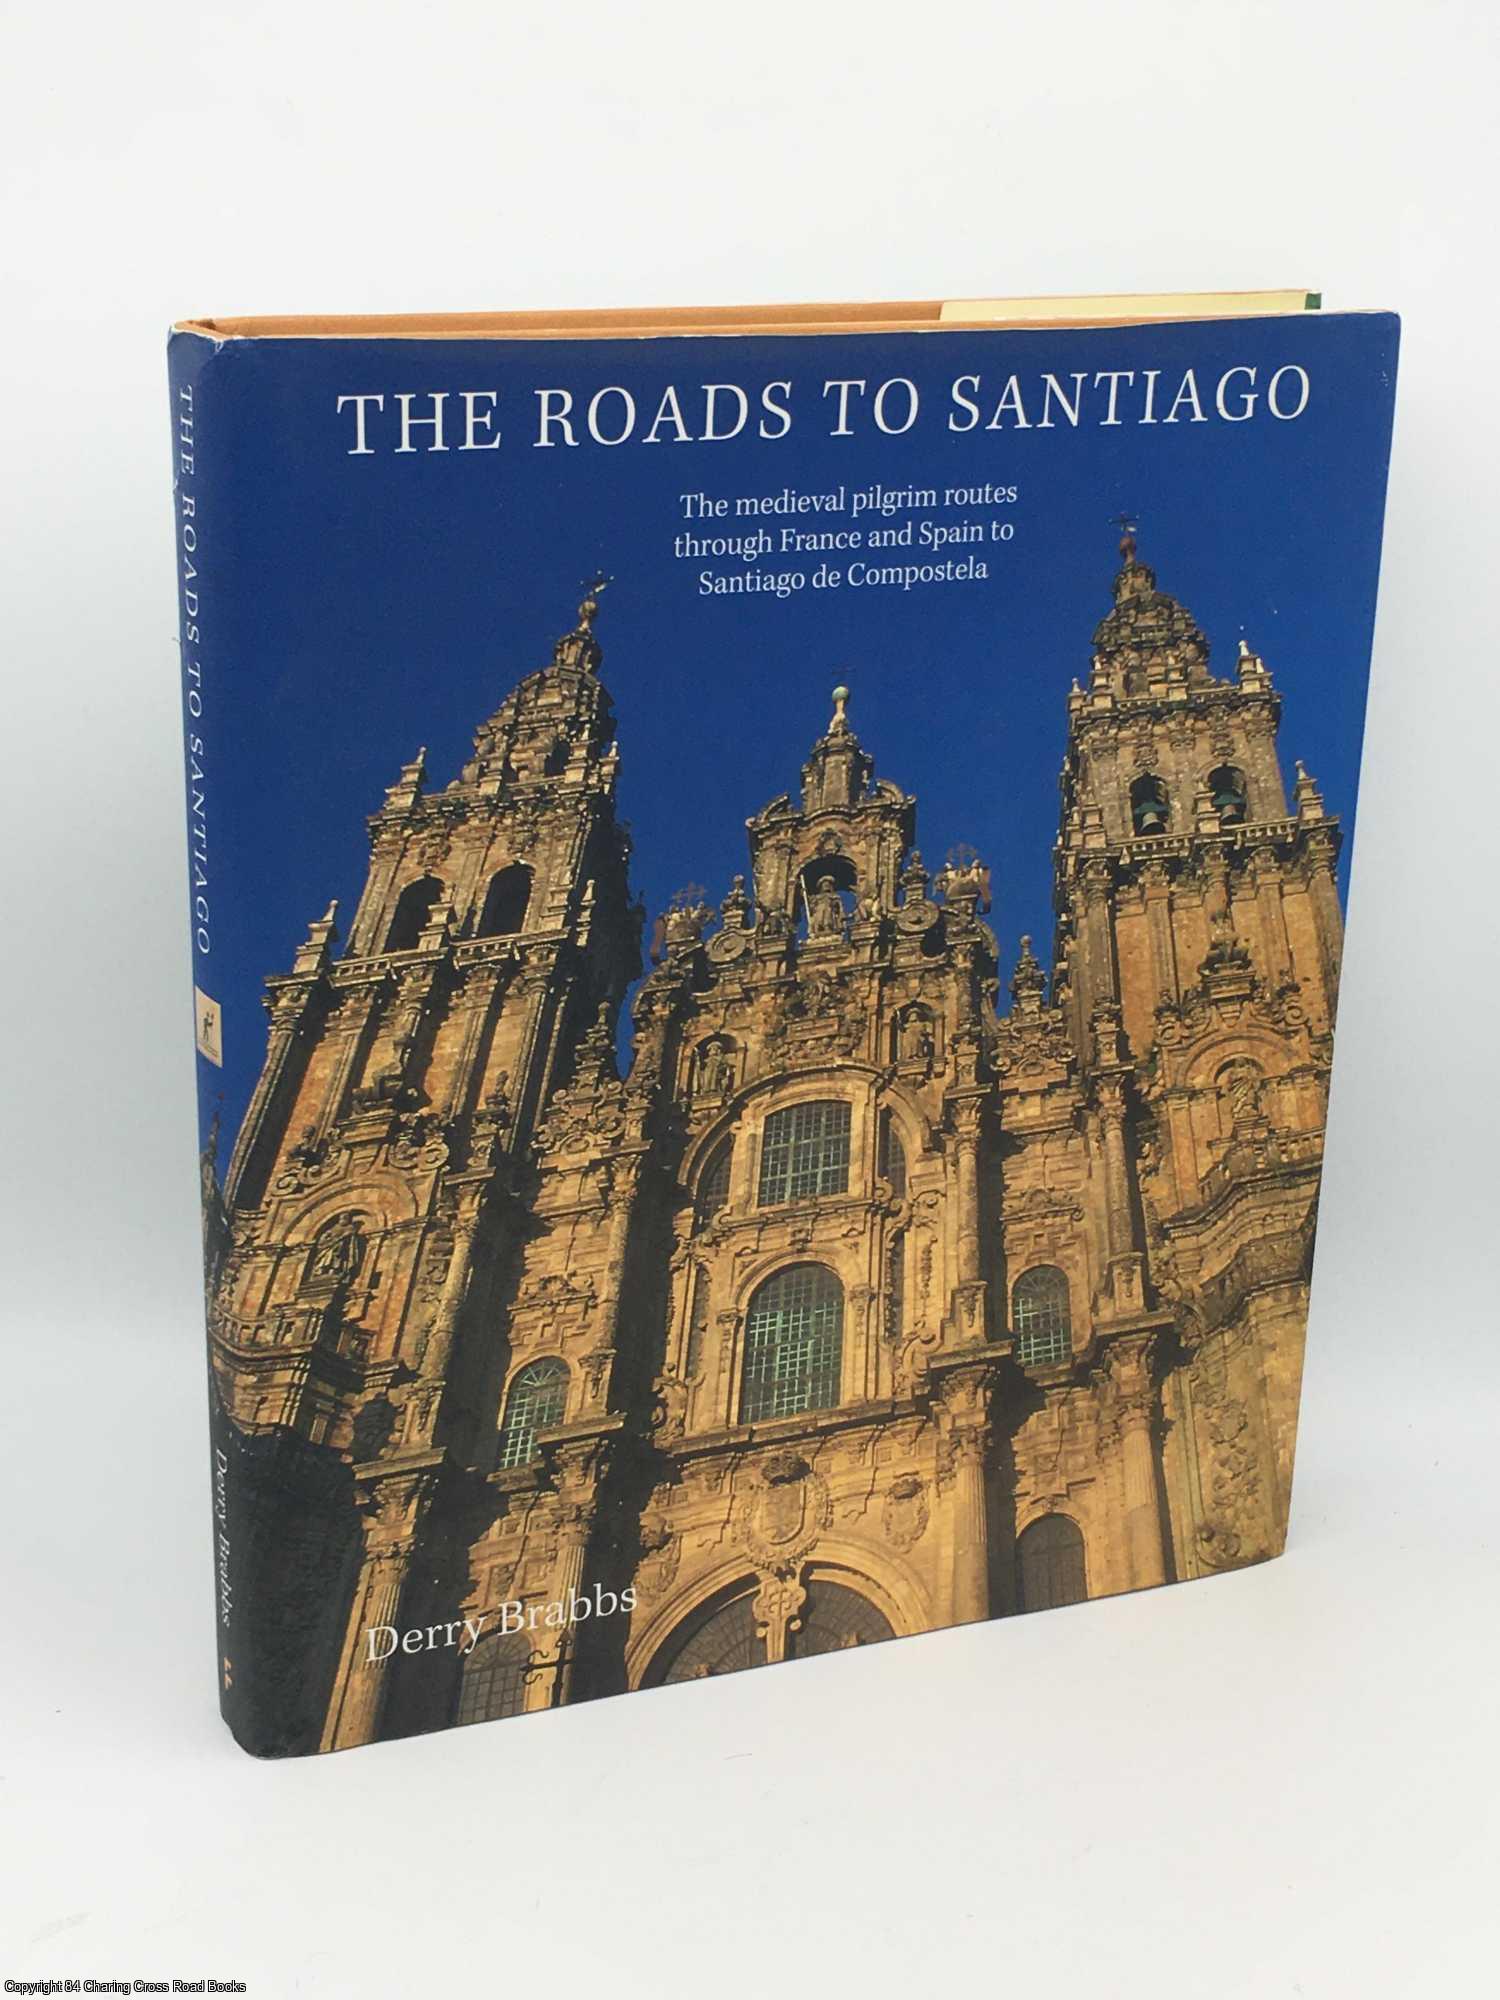 Brabbs, Derry - The Roads to Santiago: The Medieval Pilgrim Routes Through France and Spain to Santiago de Compostela